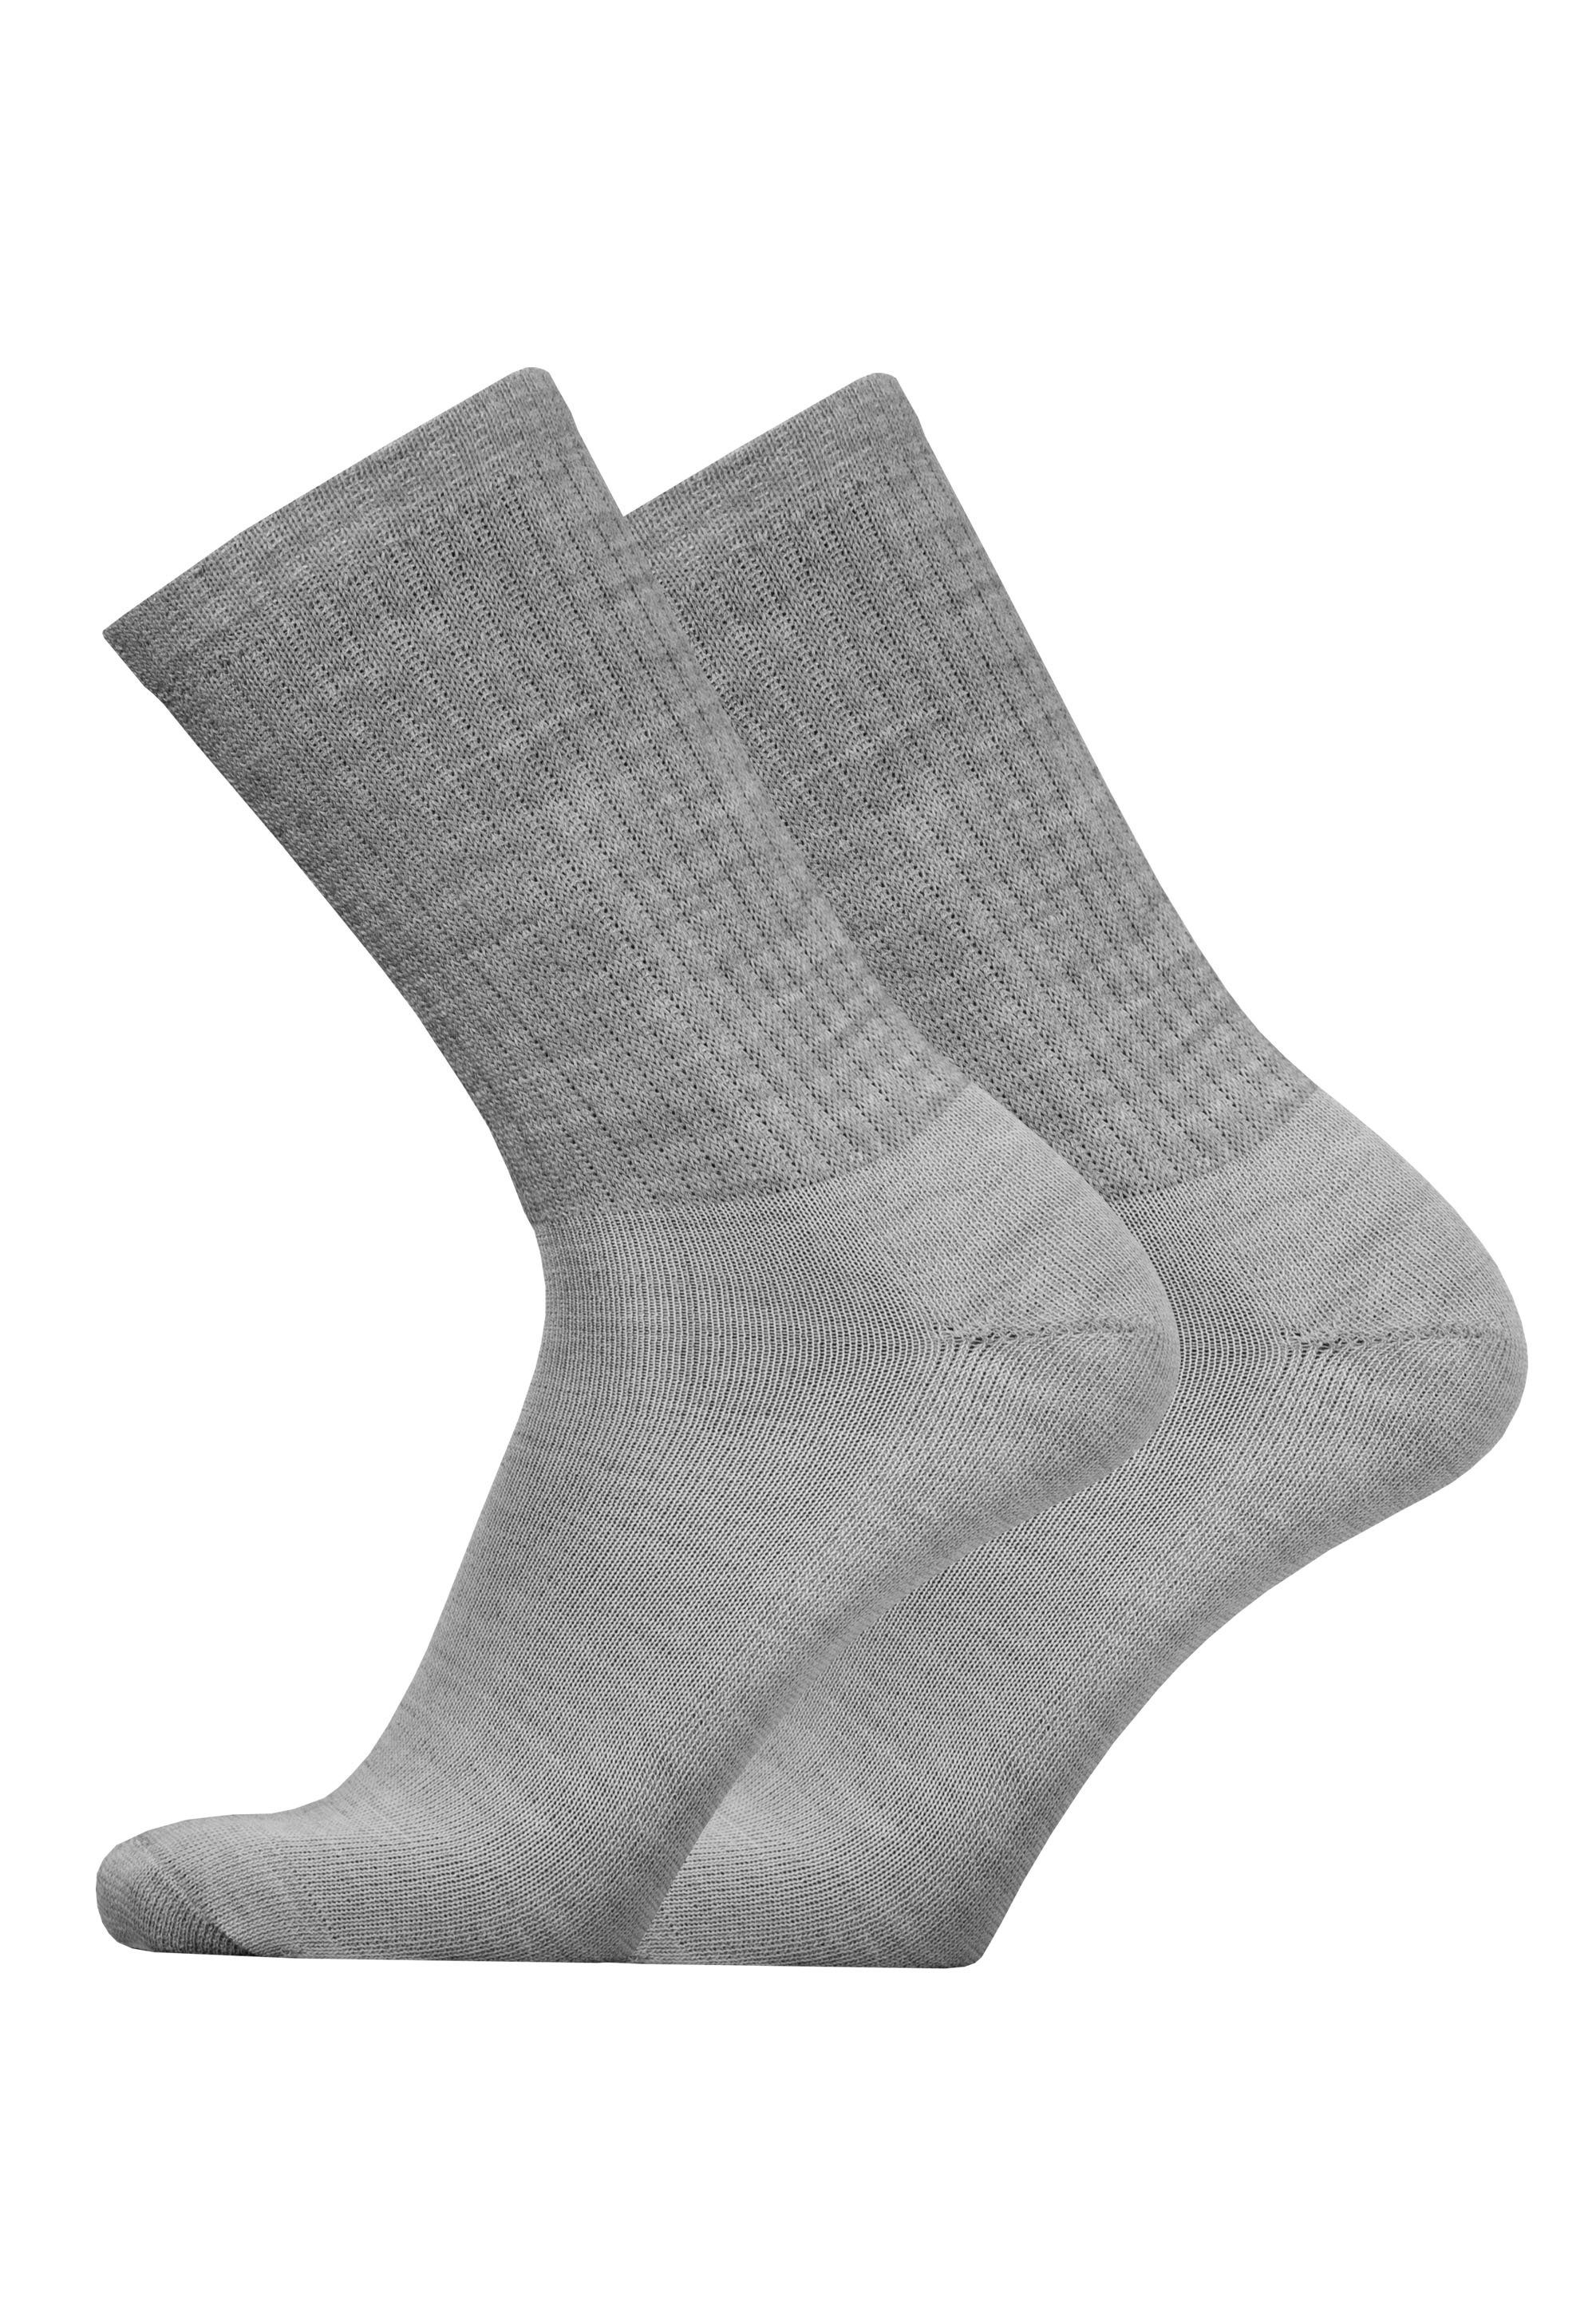 UphillSport Socken MERINO SPORT 2er Pack (2-Paar) in atmungsaktiver Qualität hellgrau